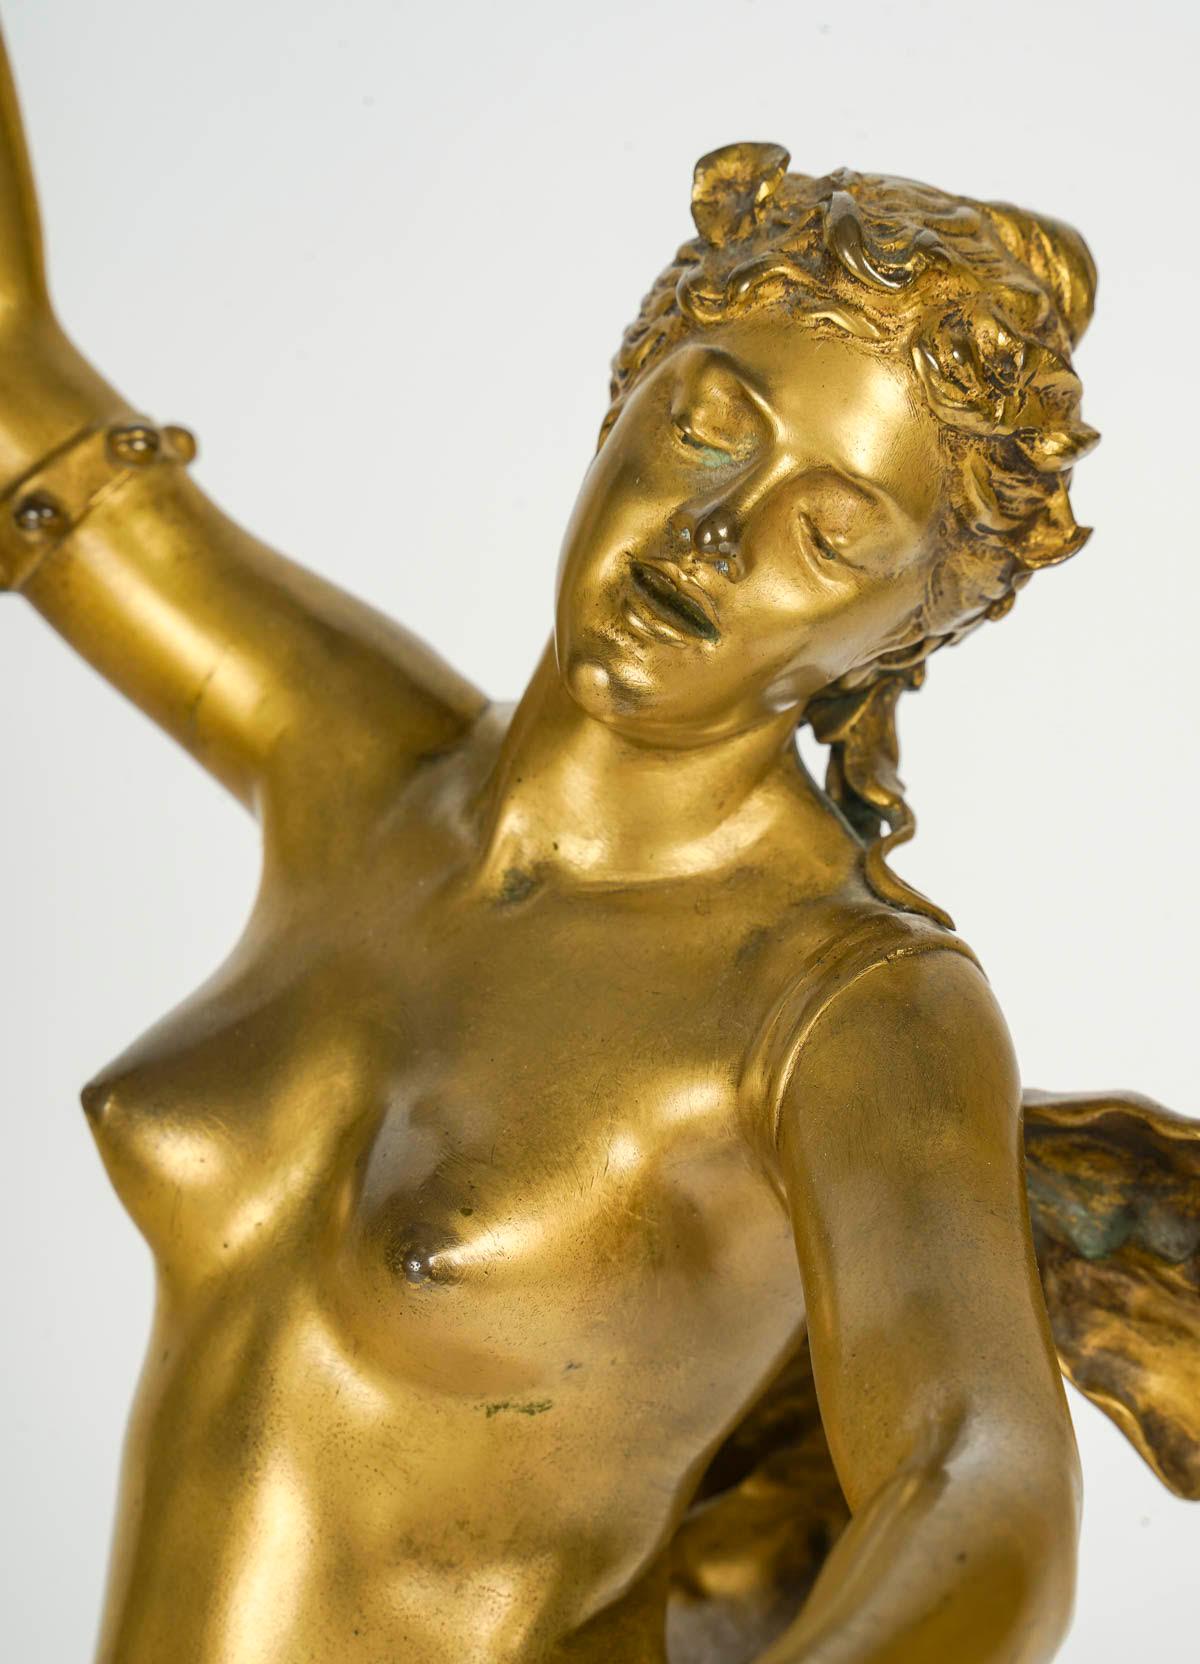 Doré Sculpture en bronze doré de Felix Charpentier, XIXe siècle, période Napoléon III. en vente